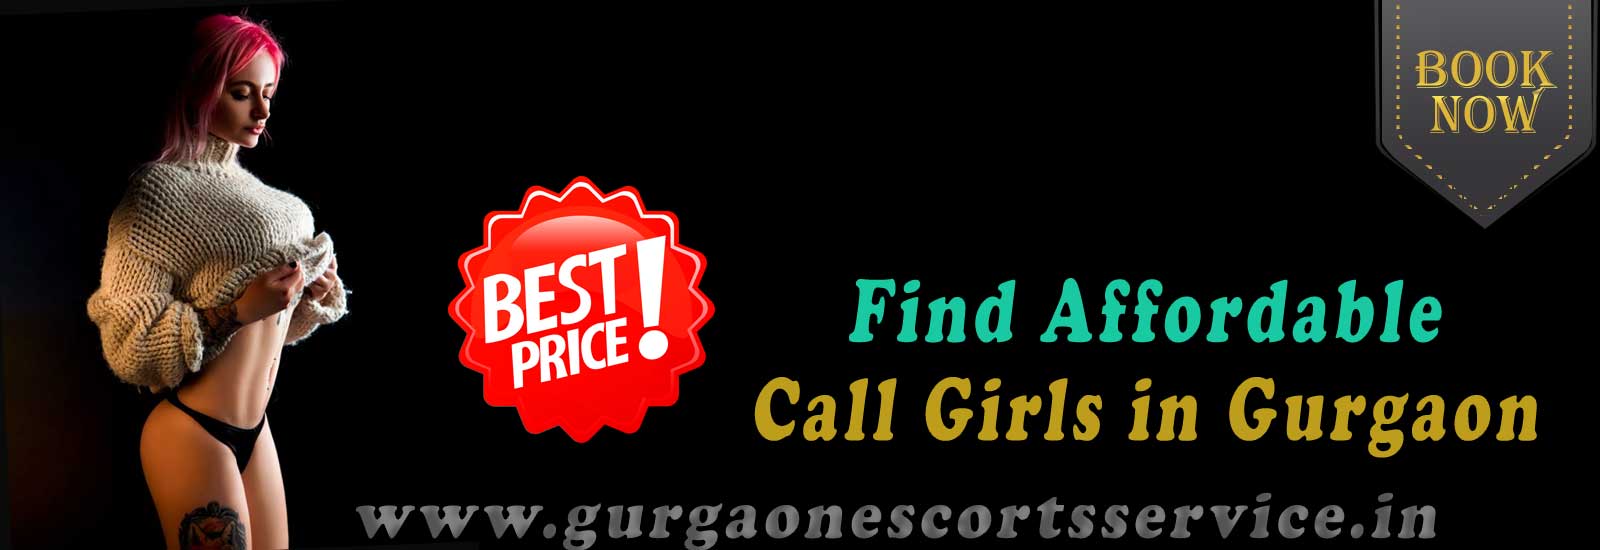 Call Girls Services Gurgaon